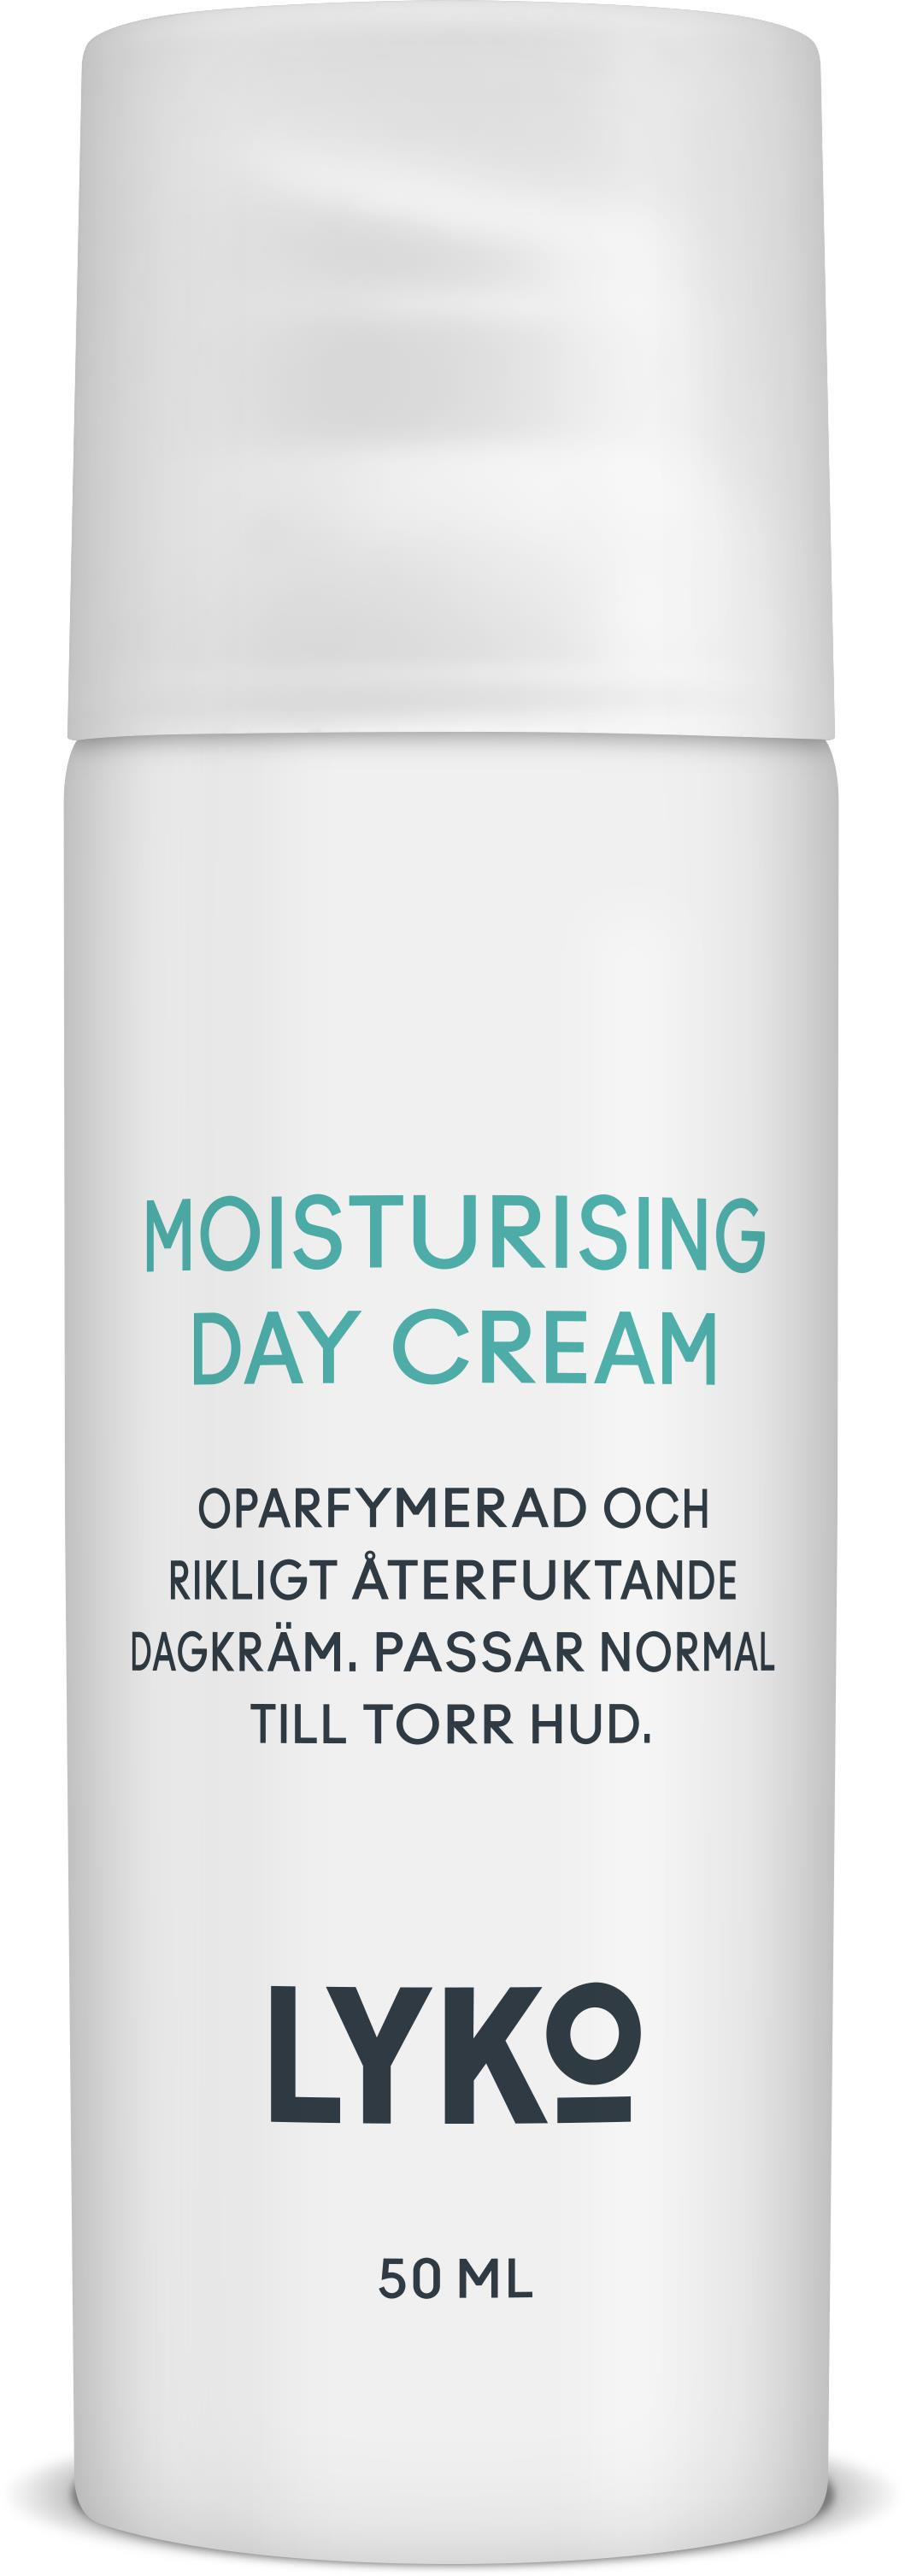 Lyko Moisturising Day Cream